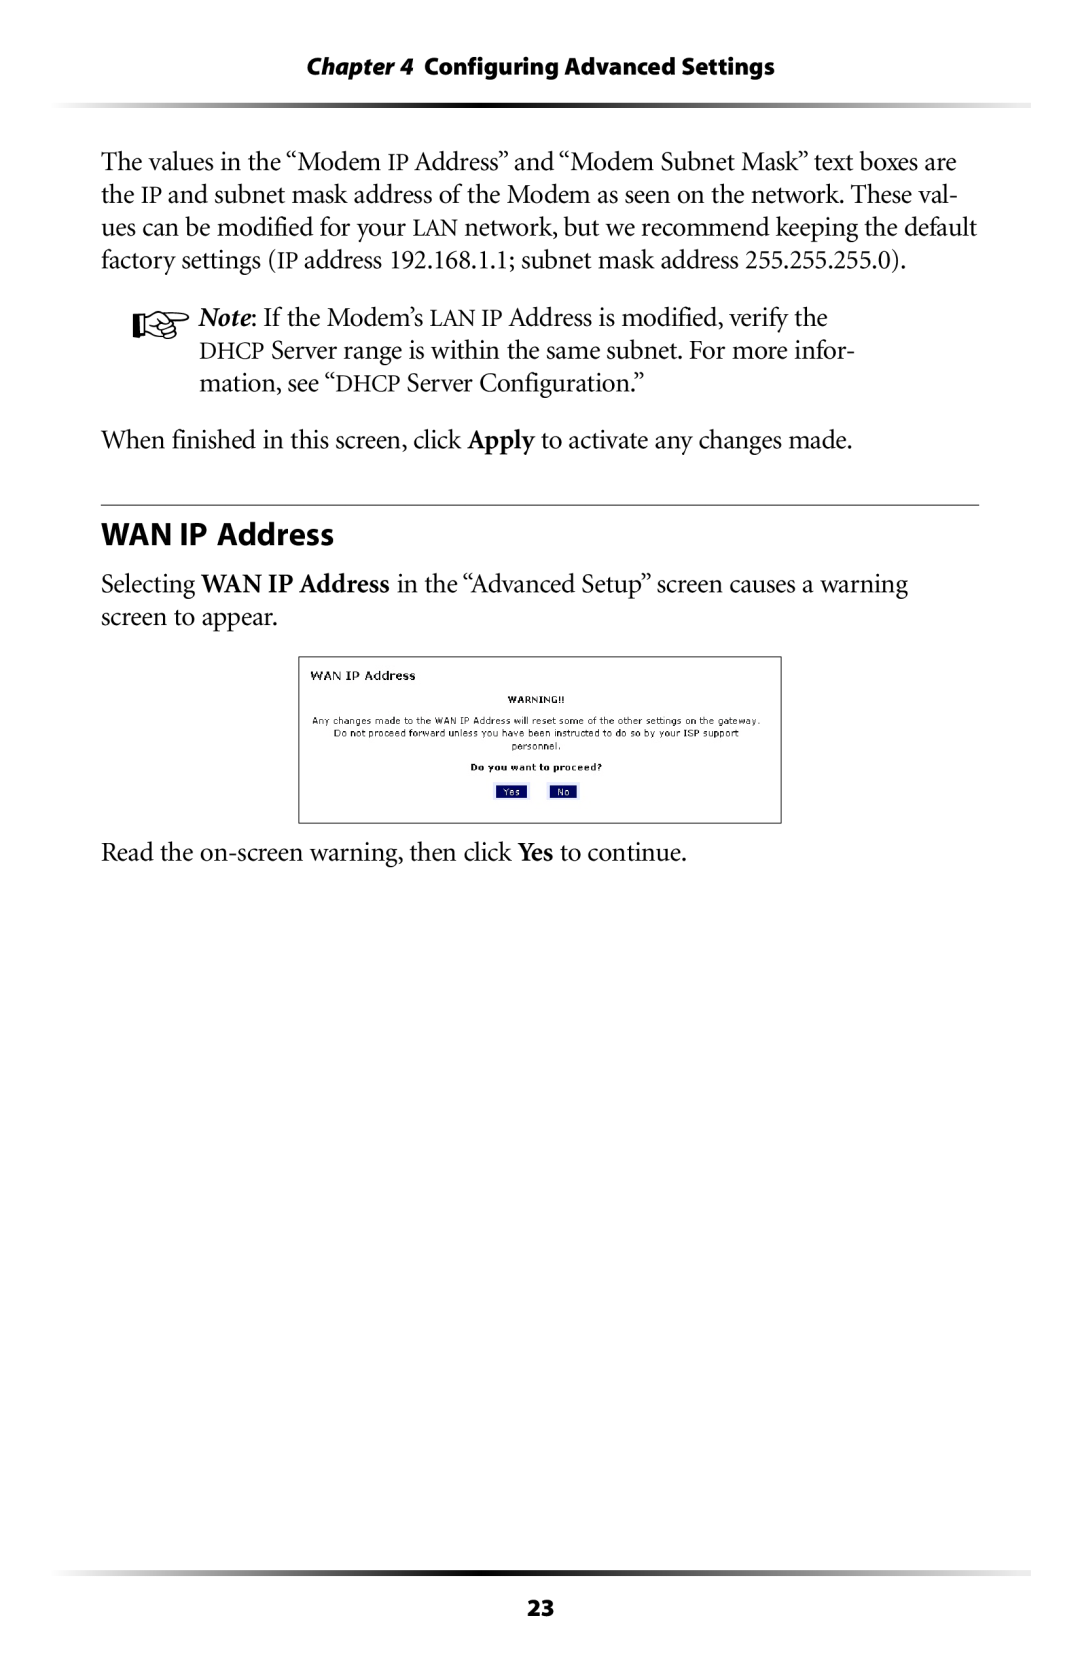 Verizon GT701C user manual WAN IP Address 